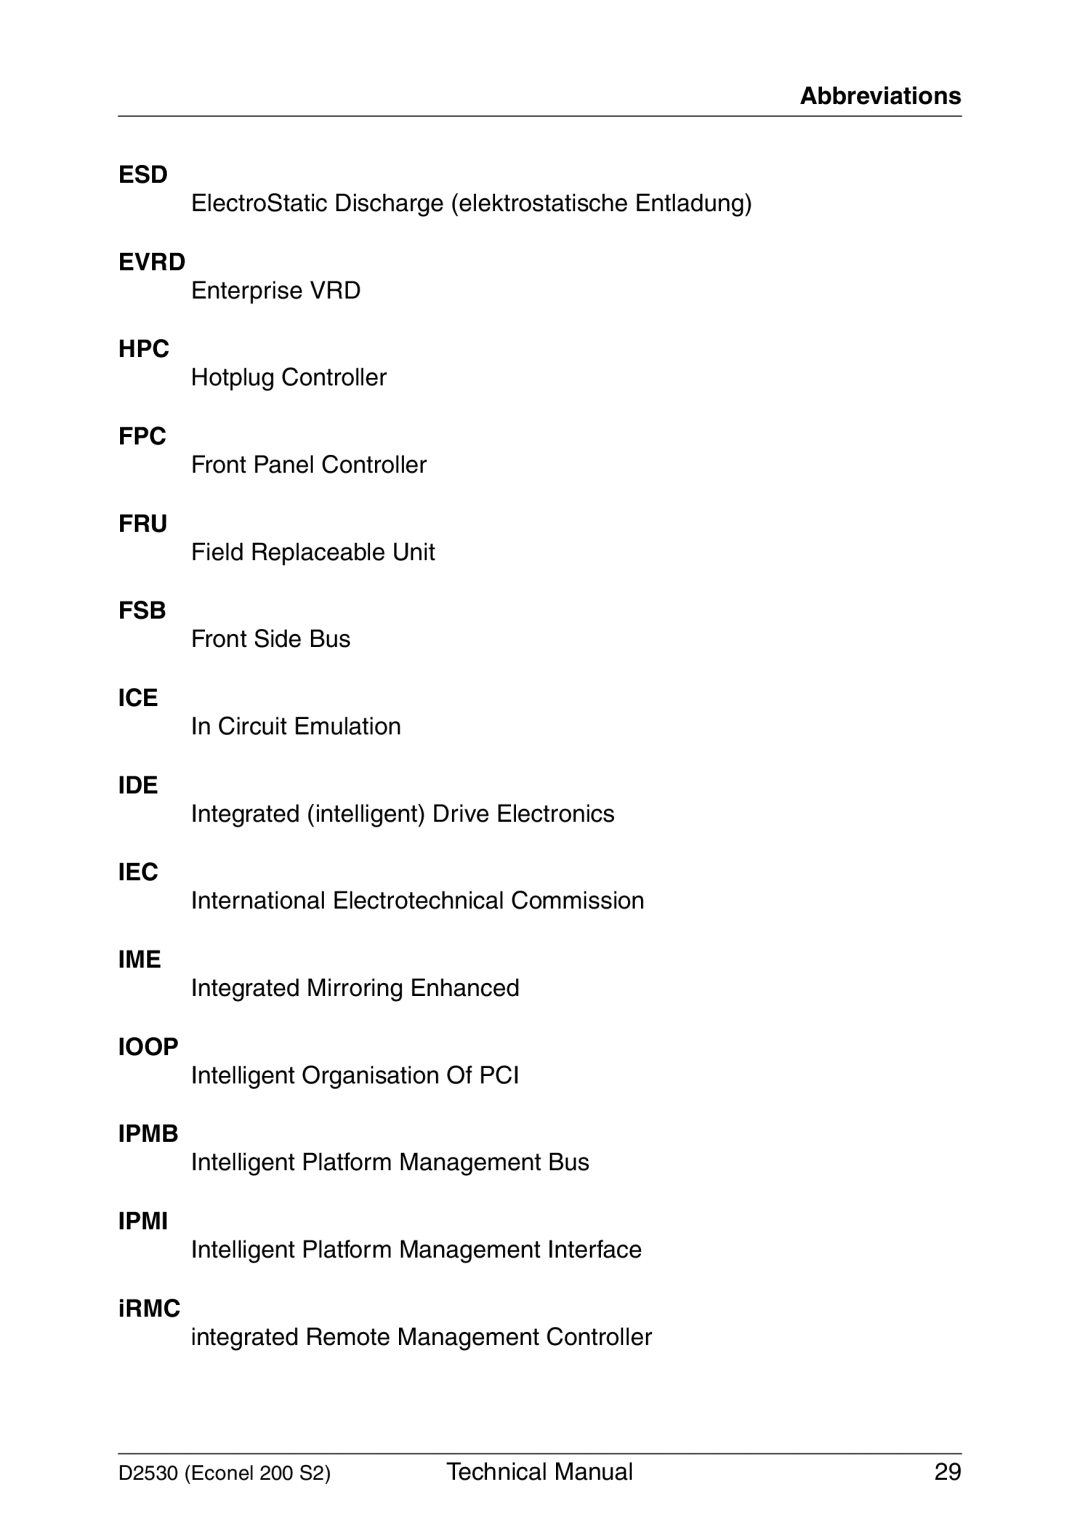 Fujitsu D2530 technical manual Esd, Evrd, Hpc, Fpc, Fru, Fsb, Ice, Ide, Iec, Ime, Ioop, Ipmb, Ipmi 